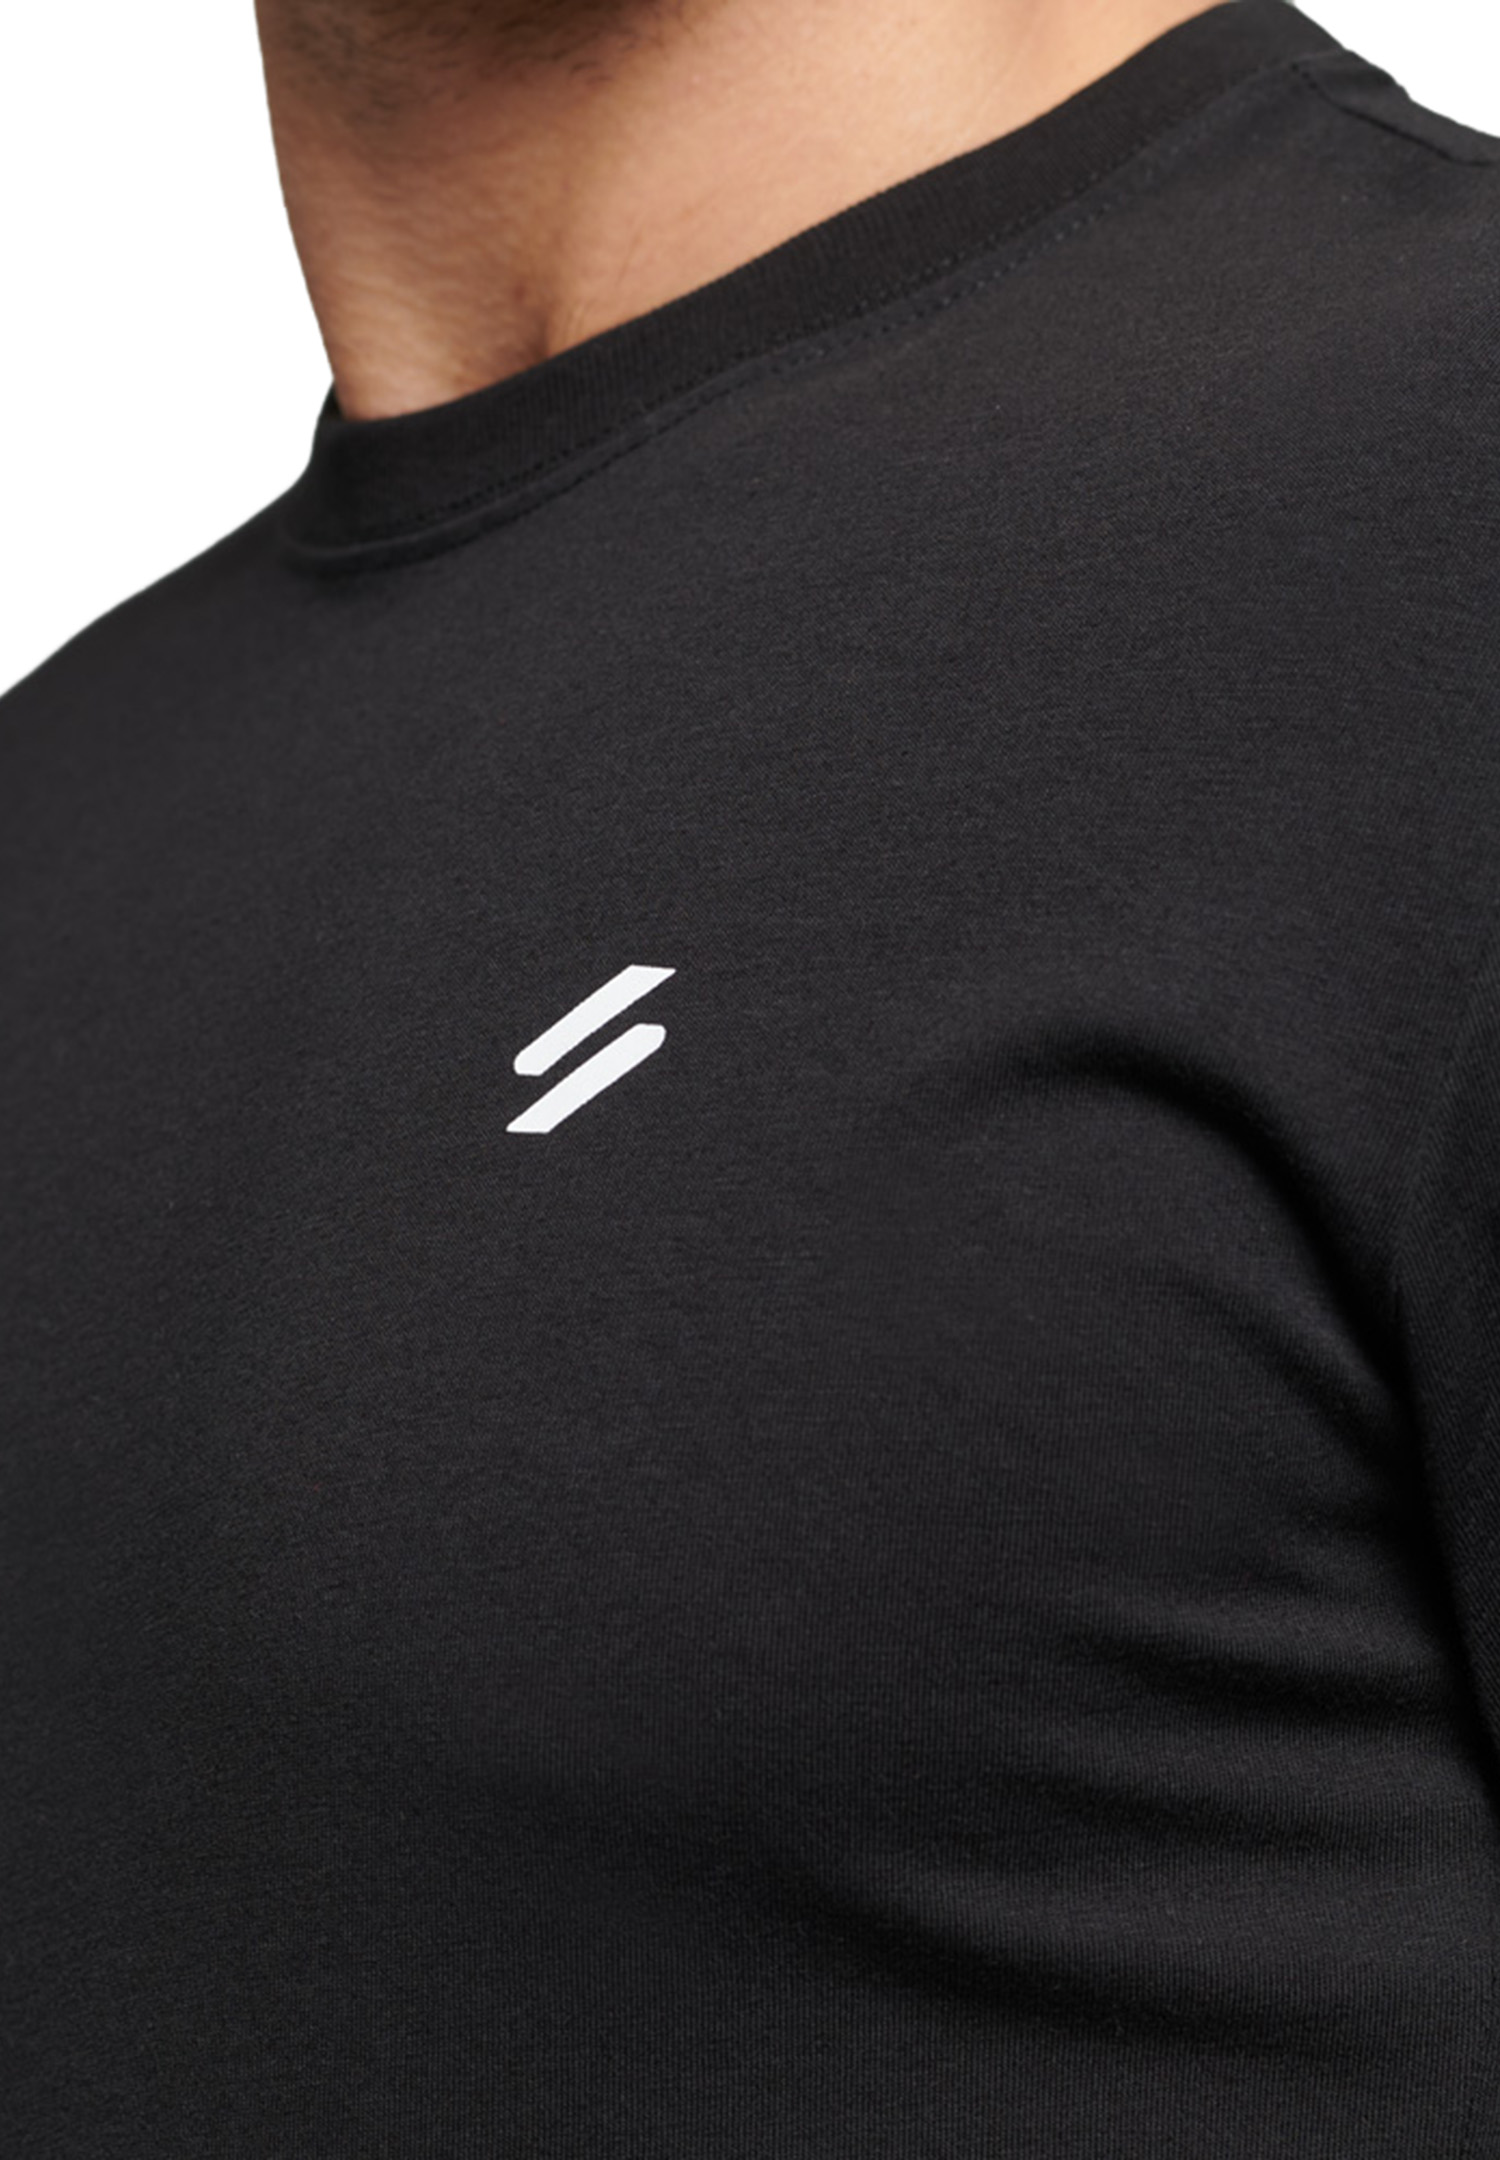 Superdry Core Loose Sort Sleeve Tee T-Shirt Herren Shirt MS311304A schwarz